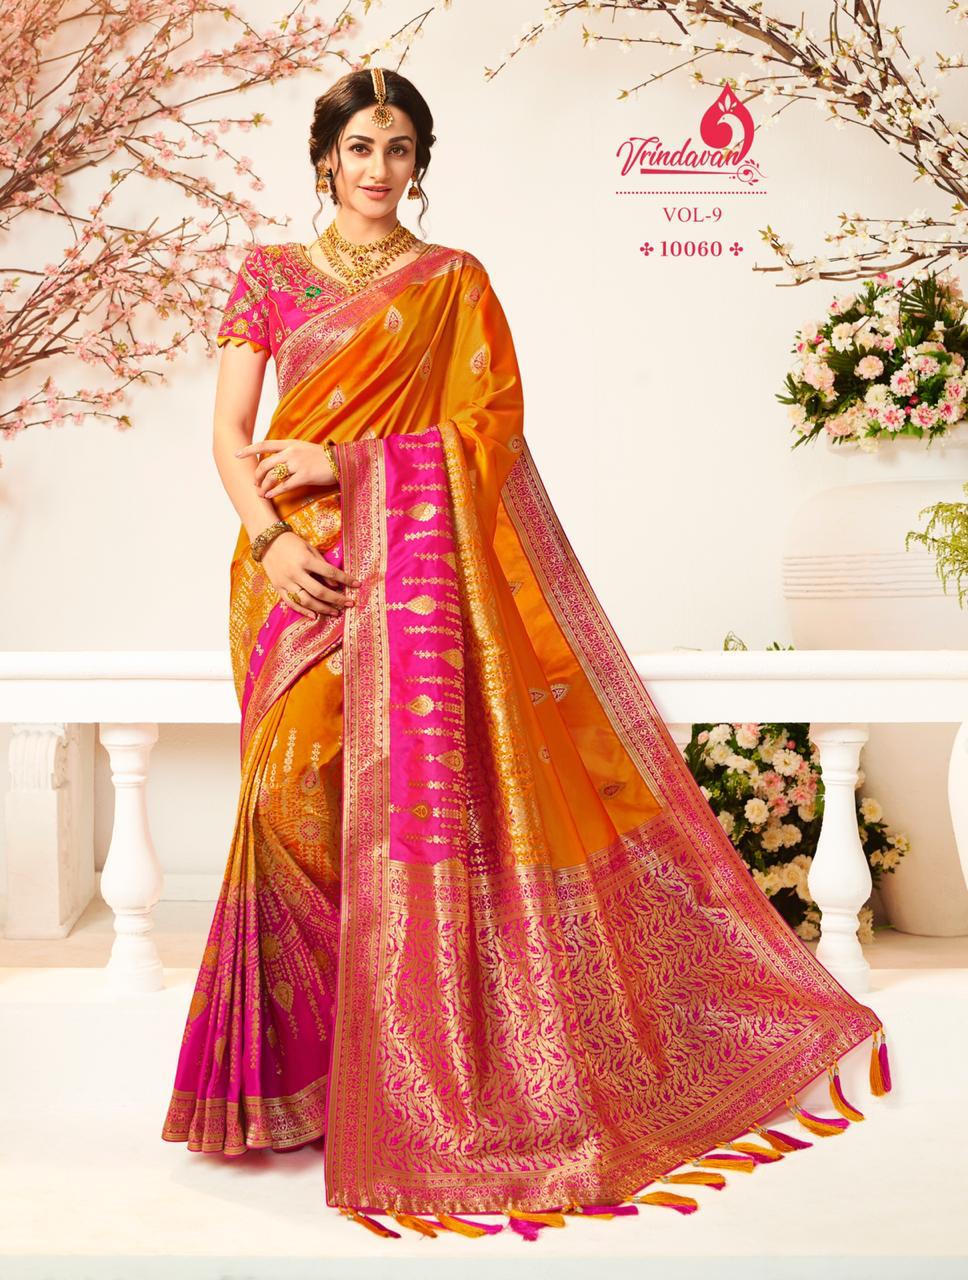 Vrindavan Vol 9 By Royal Banarasi Silk Exclusive Stylish Saree Wholesaler